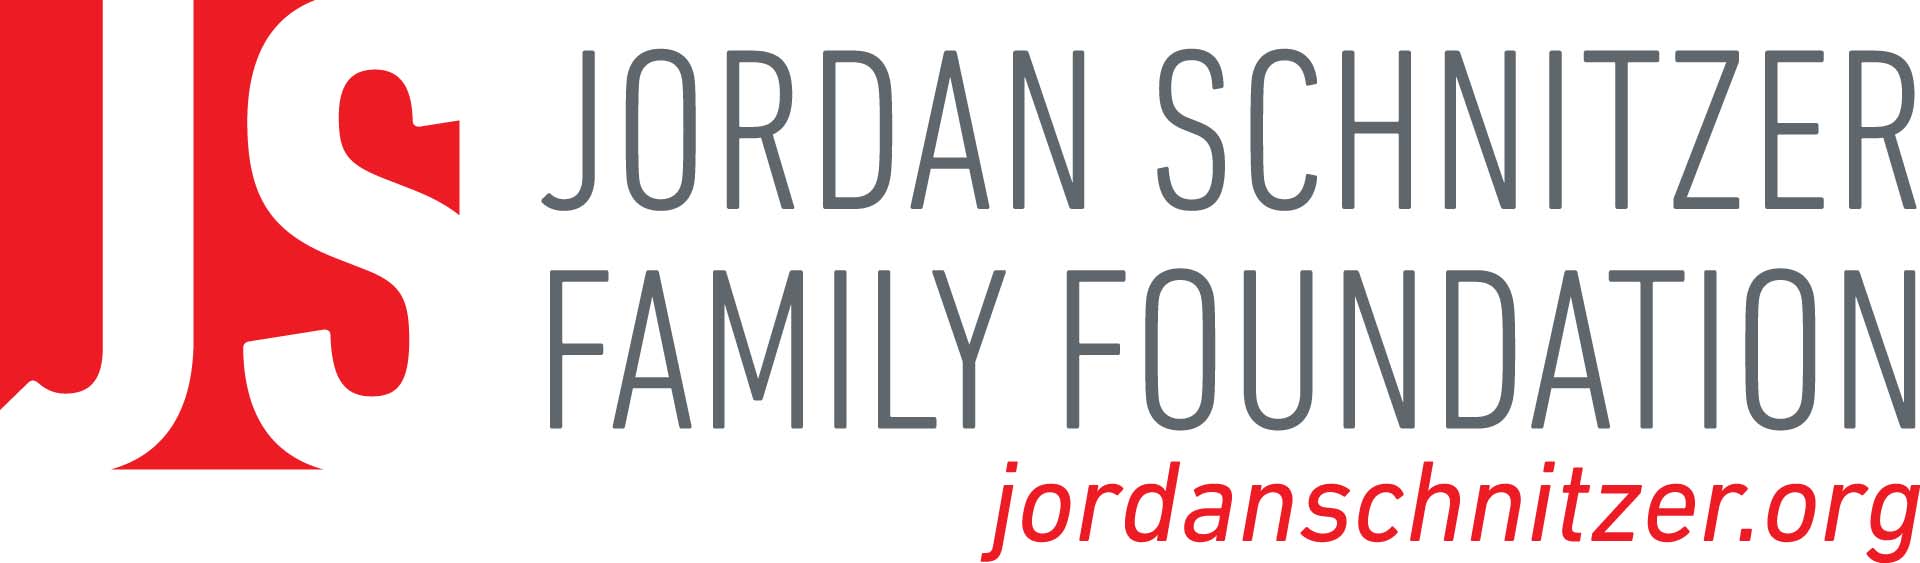 Jordan Schintzer Family Foundation Logo